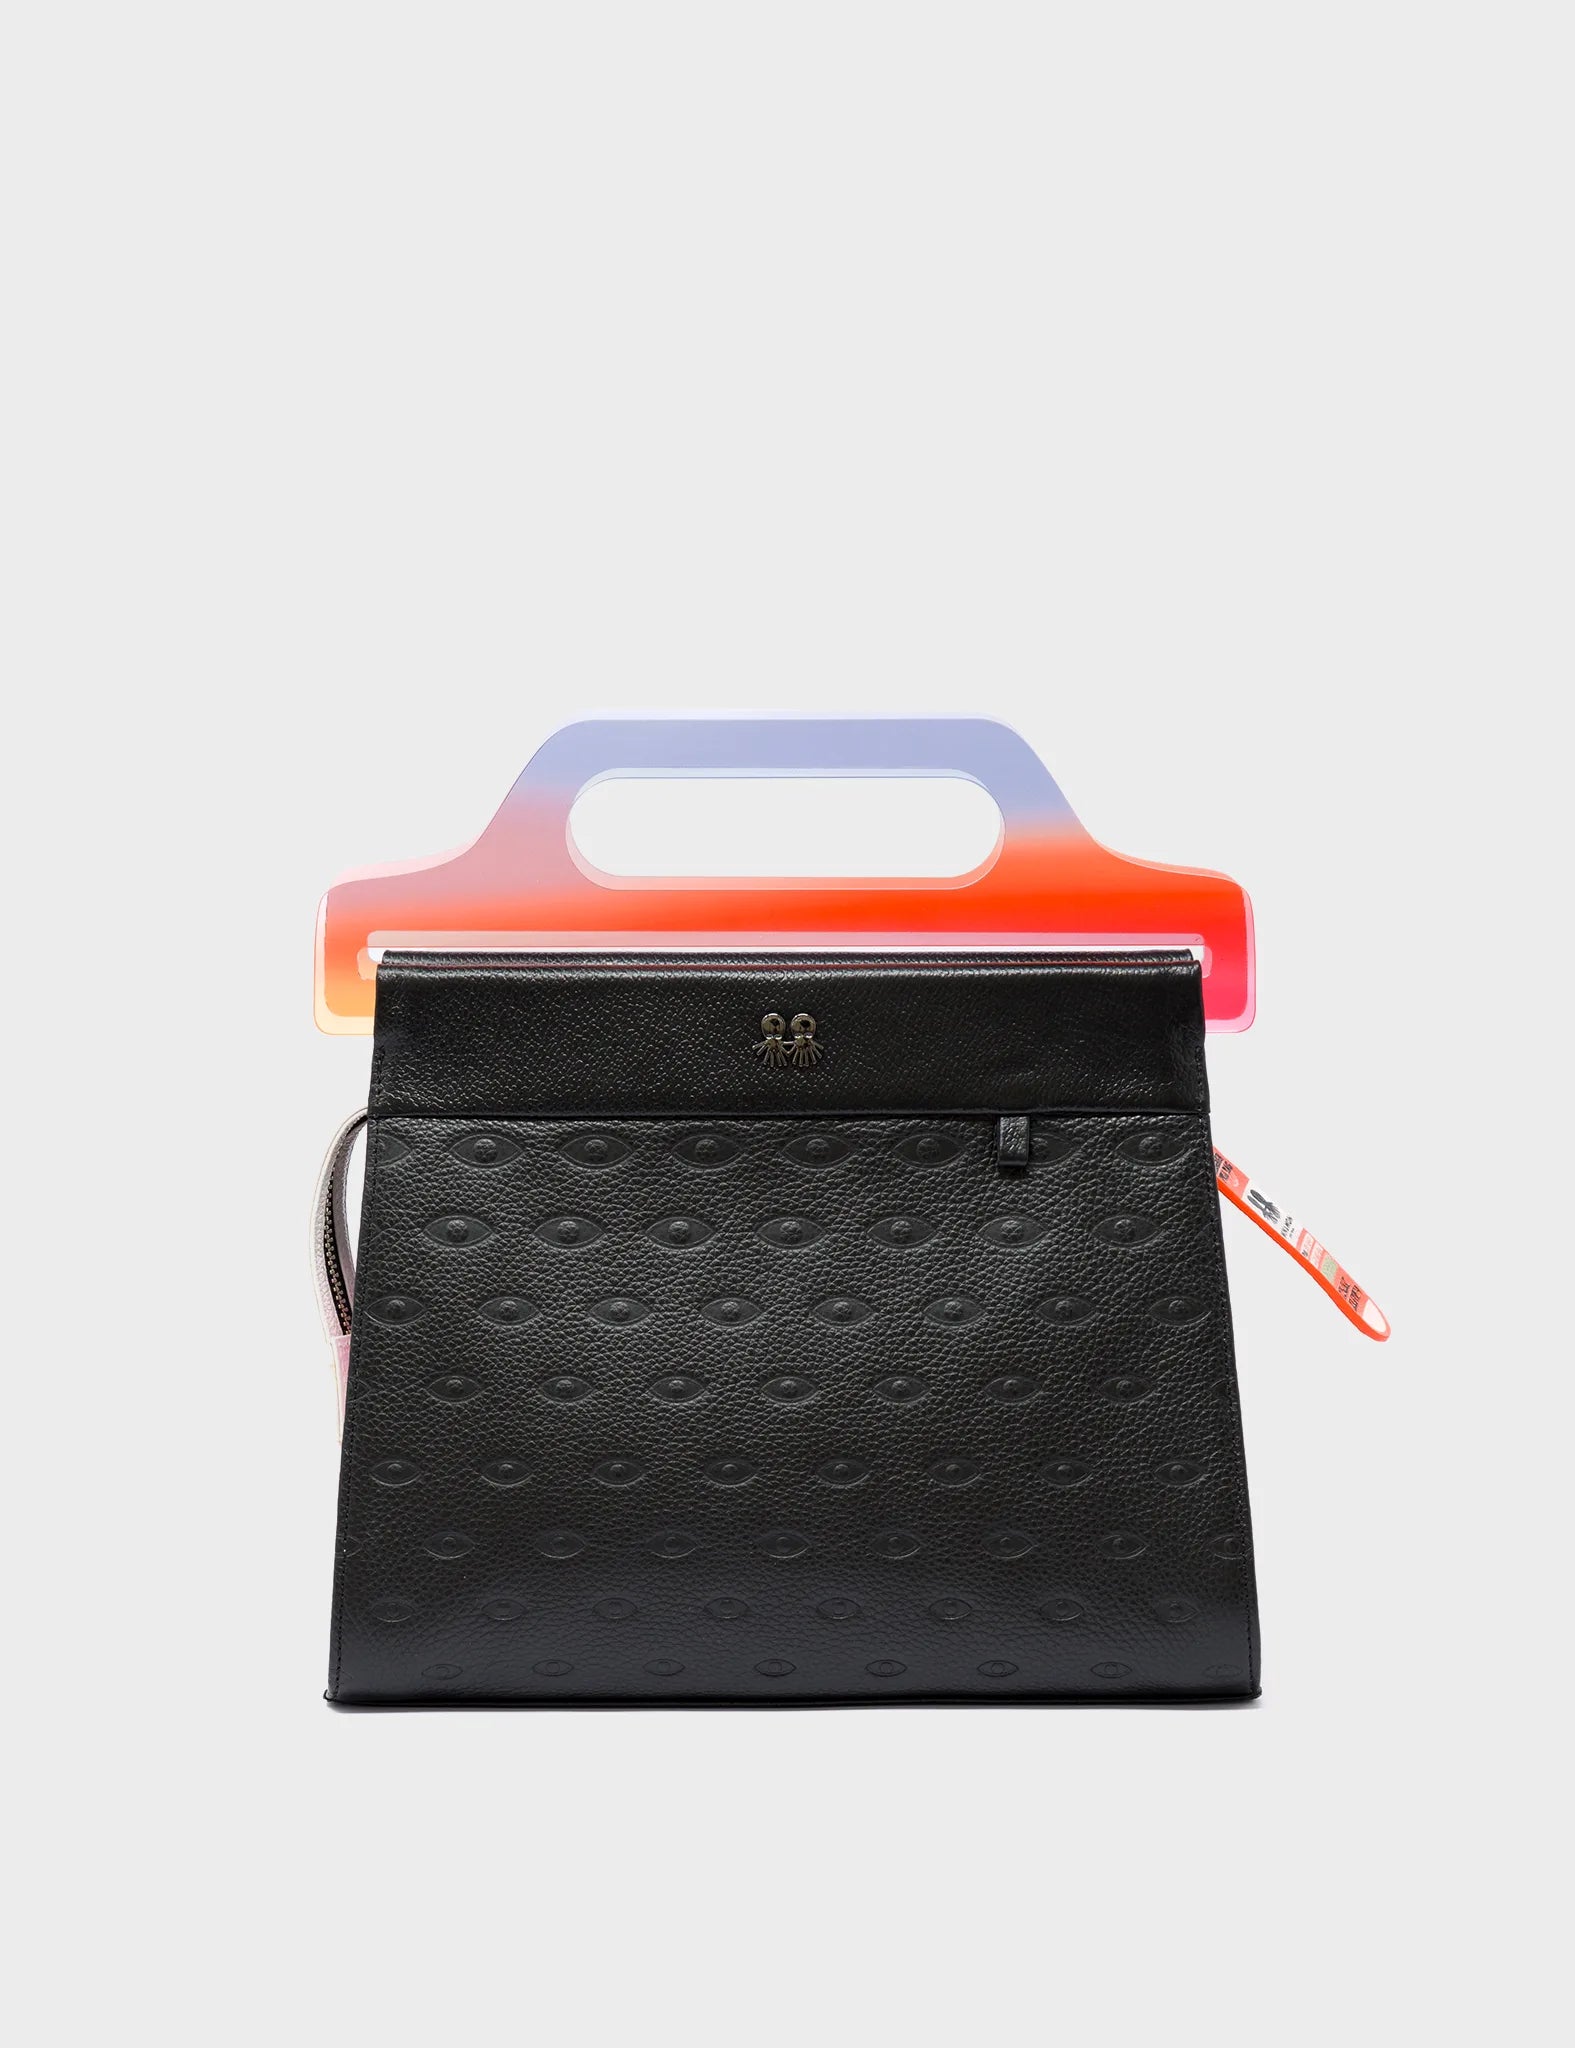 Black Leather Crossbody Handbag Plastic Handle - Groovy Rainbow Design - Front 